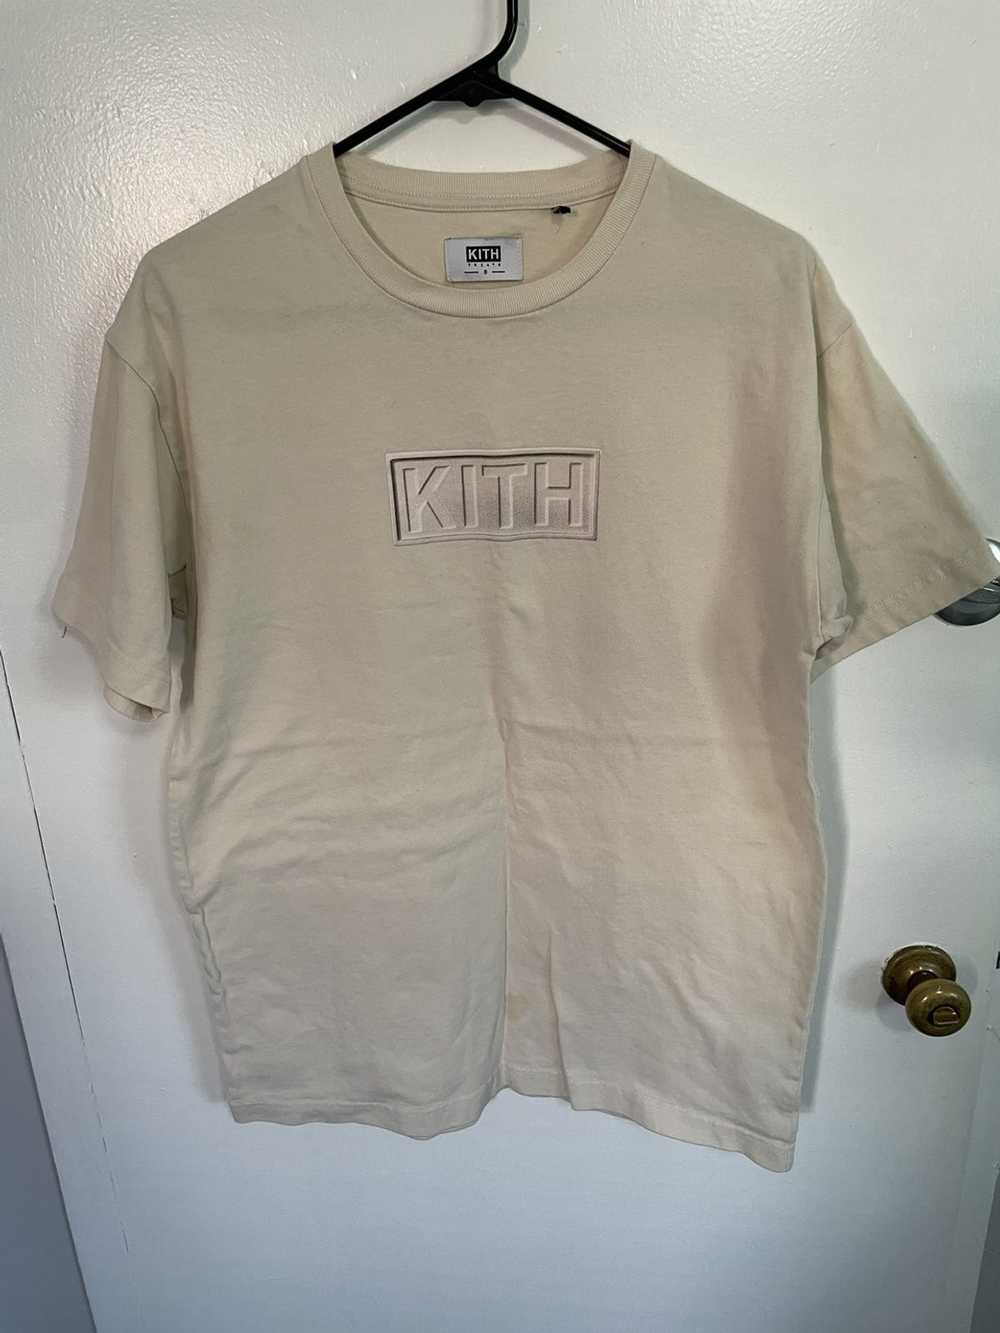 Kith Kith box logo t shirt - image 1